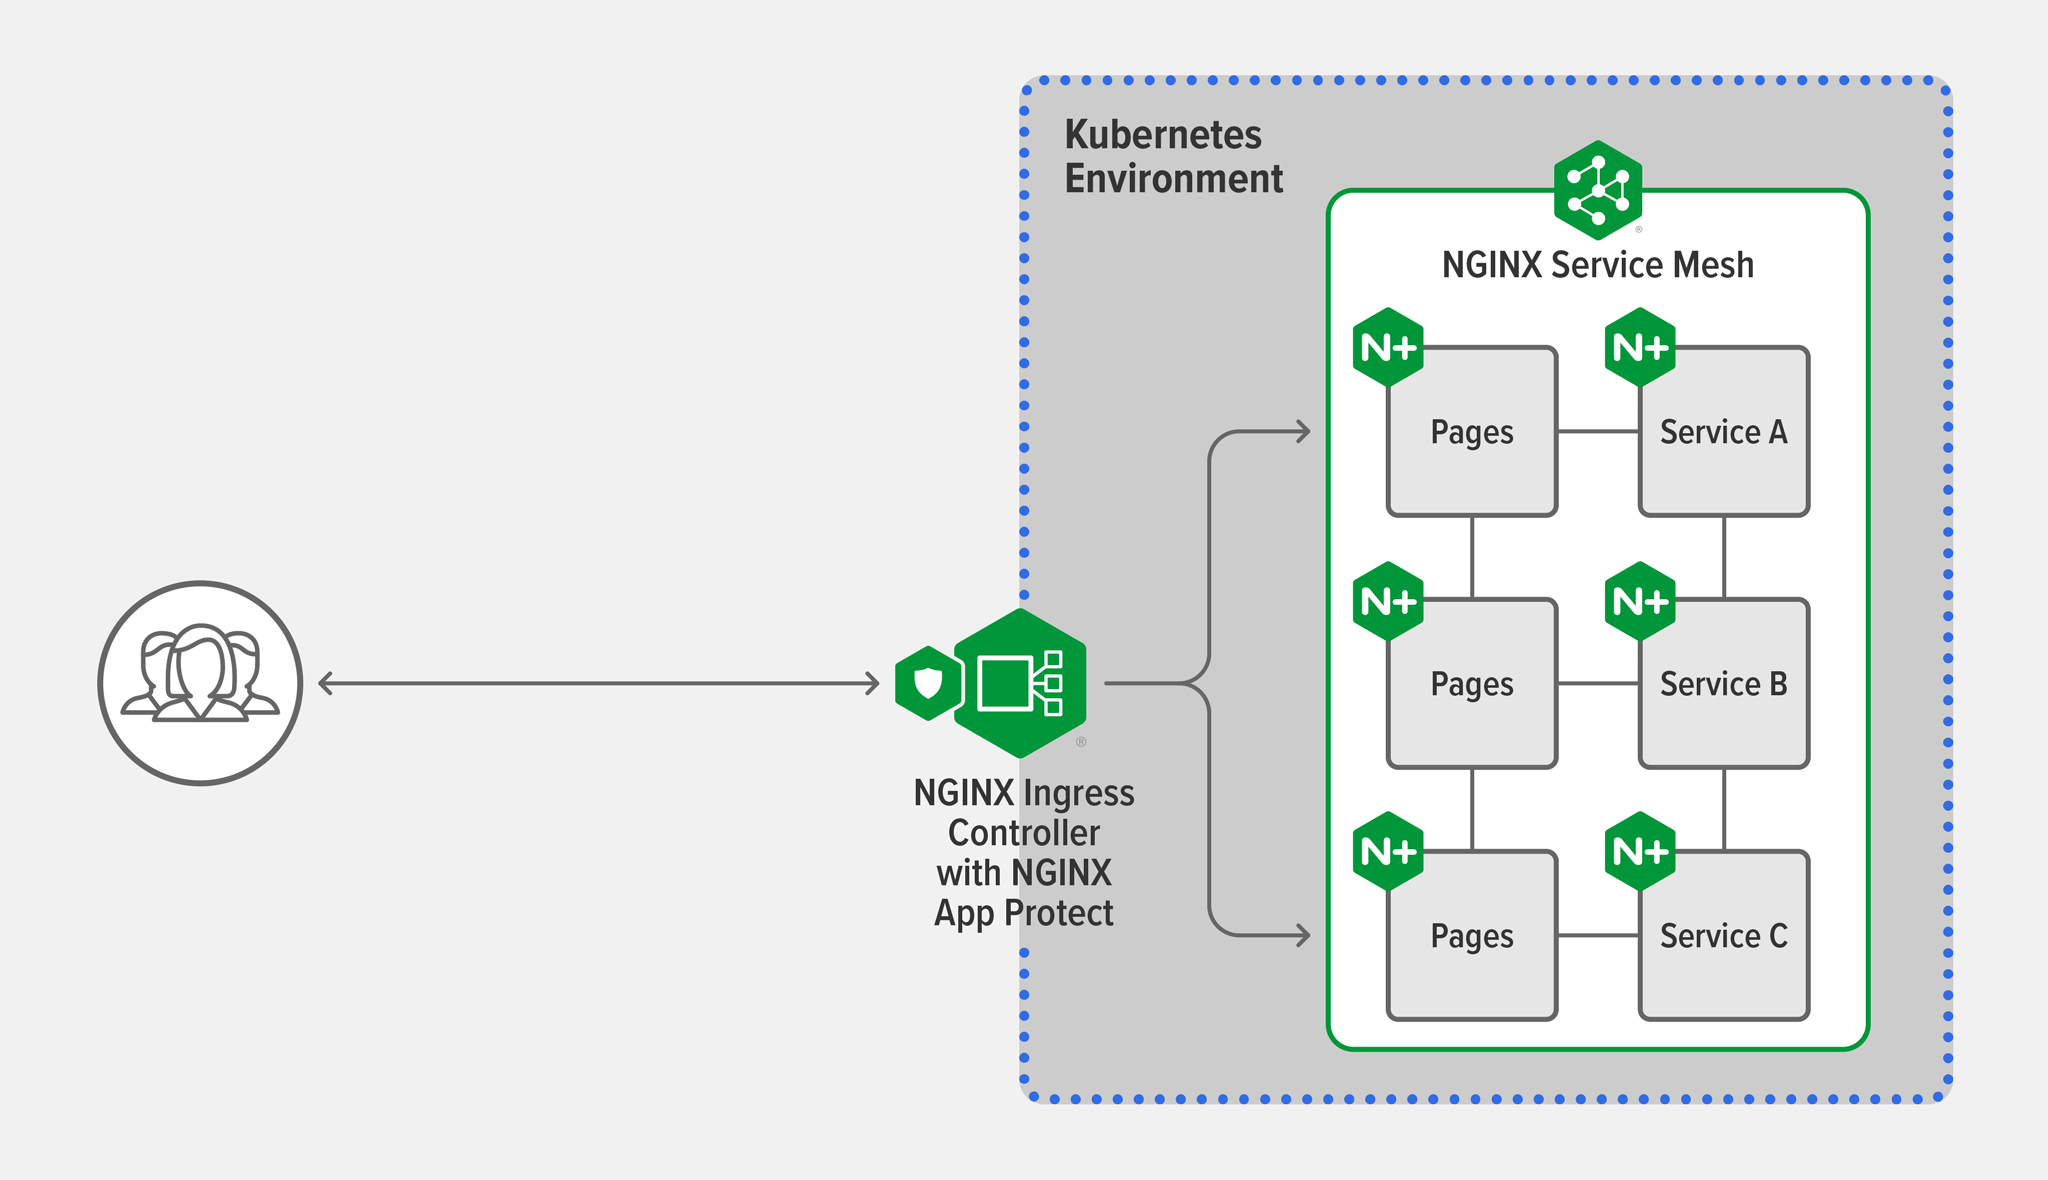 Topology diagram of Kubernetes environment with NGINX App Protect WAF deployed alongside a NGINX Ingress Controller, plus NGINX Service Mesh